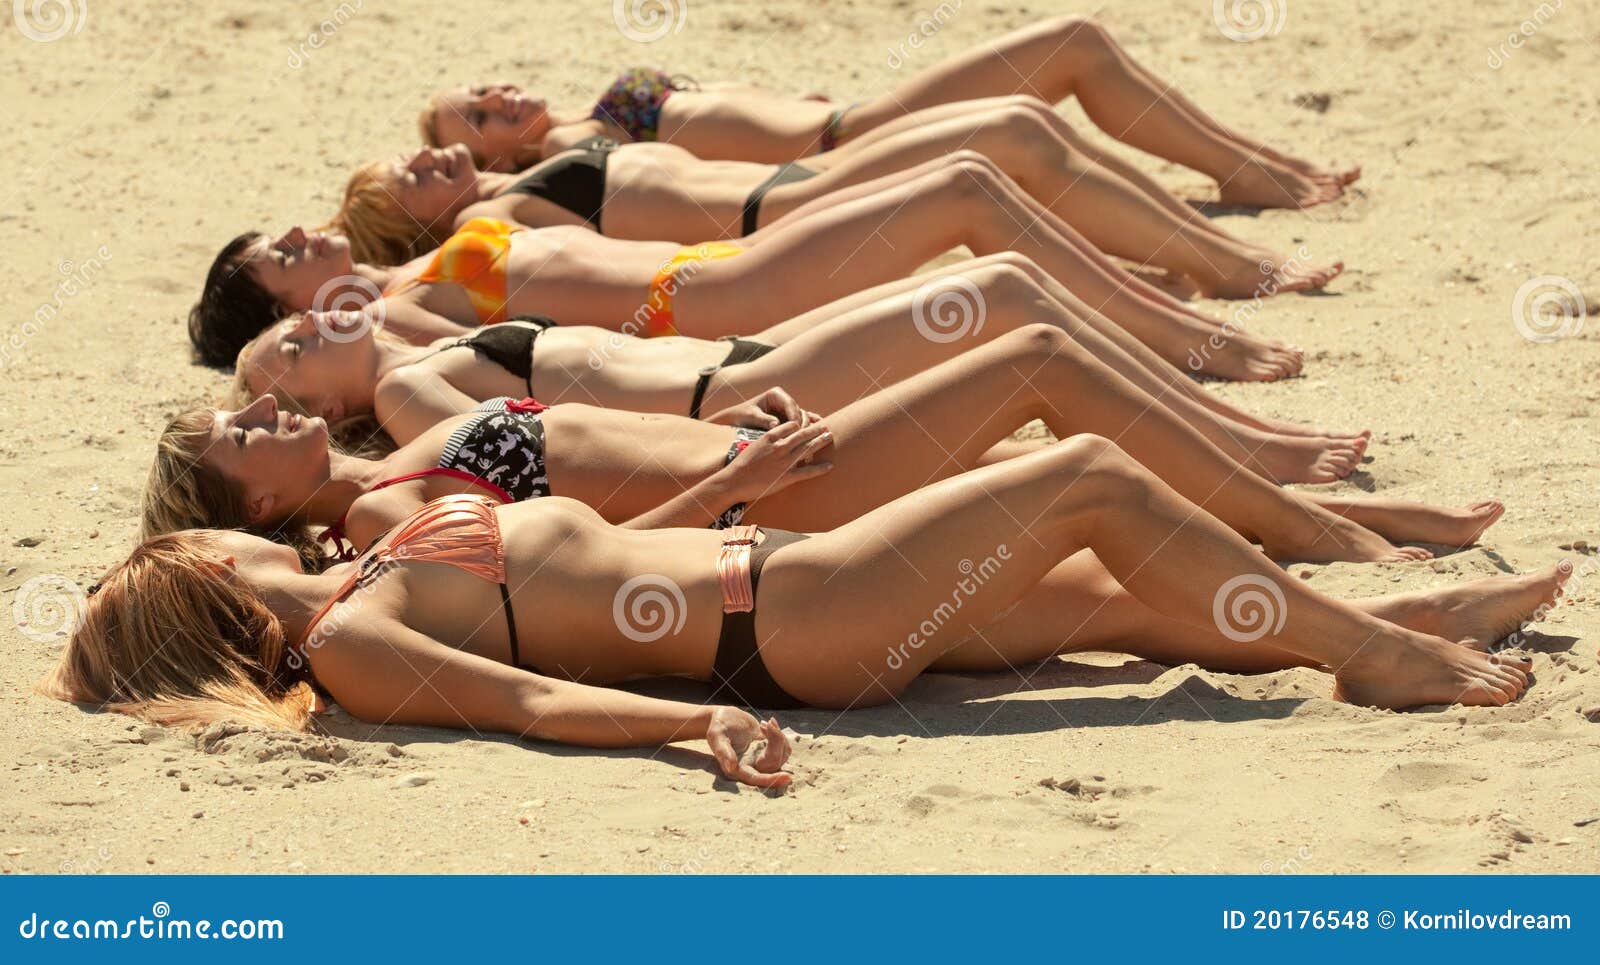 barefoot beach girls voyeur Porn Photos Hd